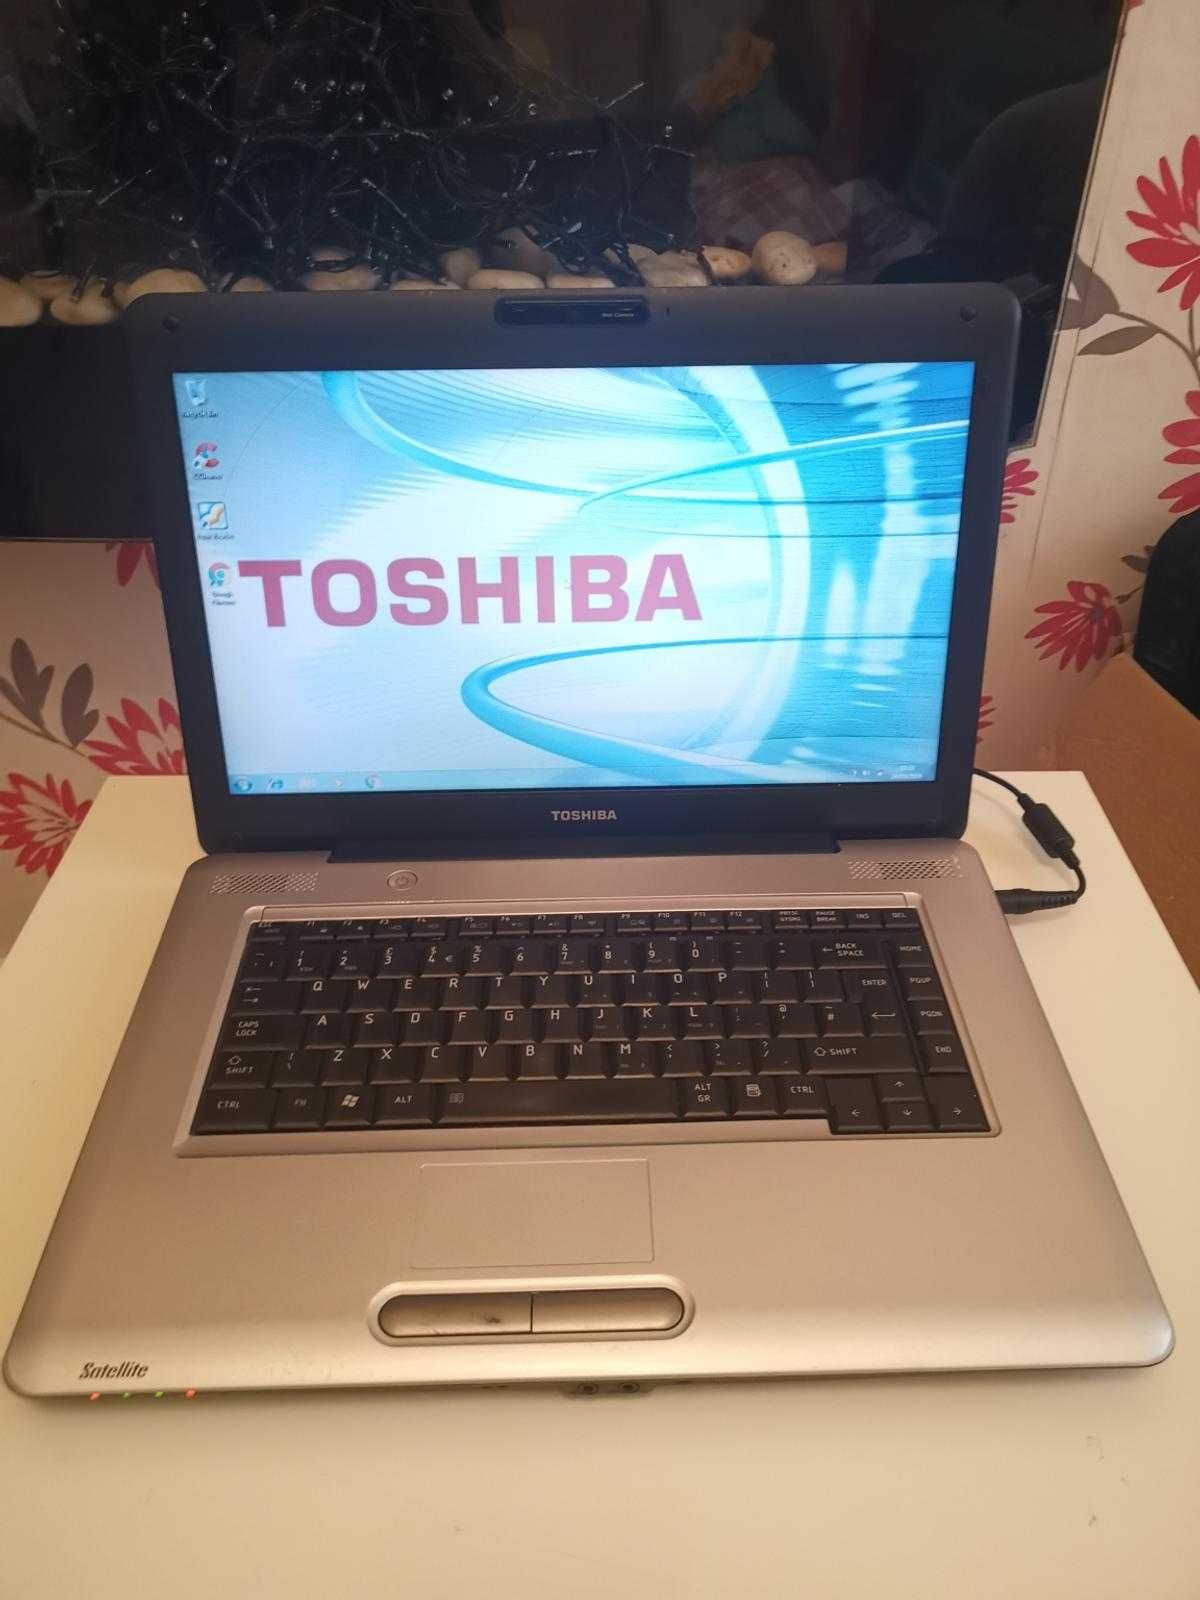 Dezmembrez Toshiba c50 c660 L450 L300 A 300 A200